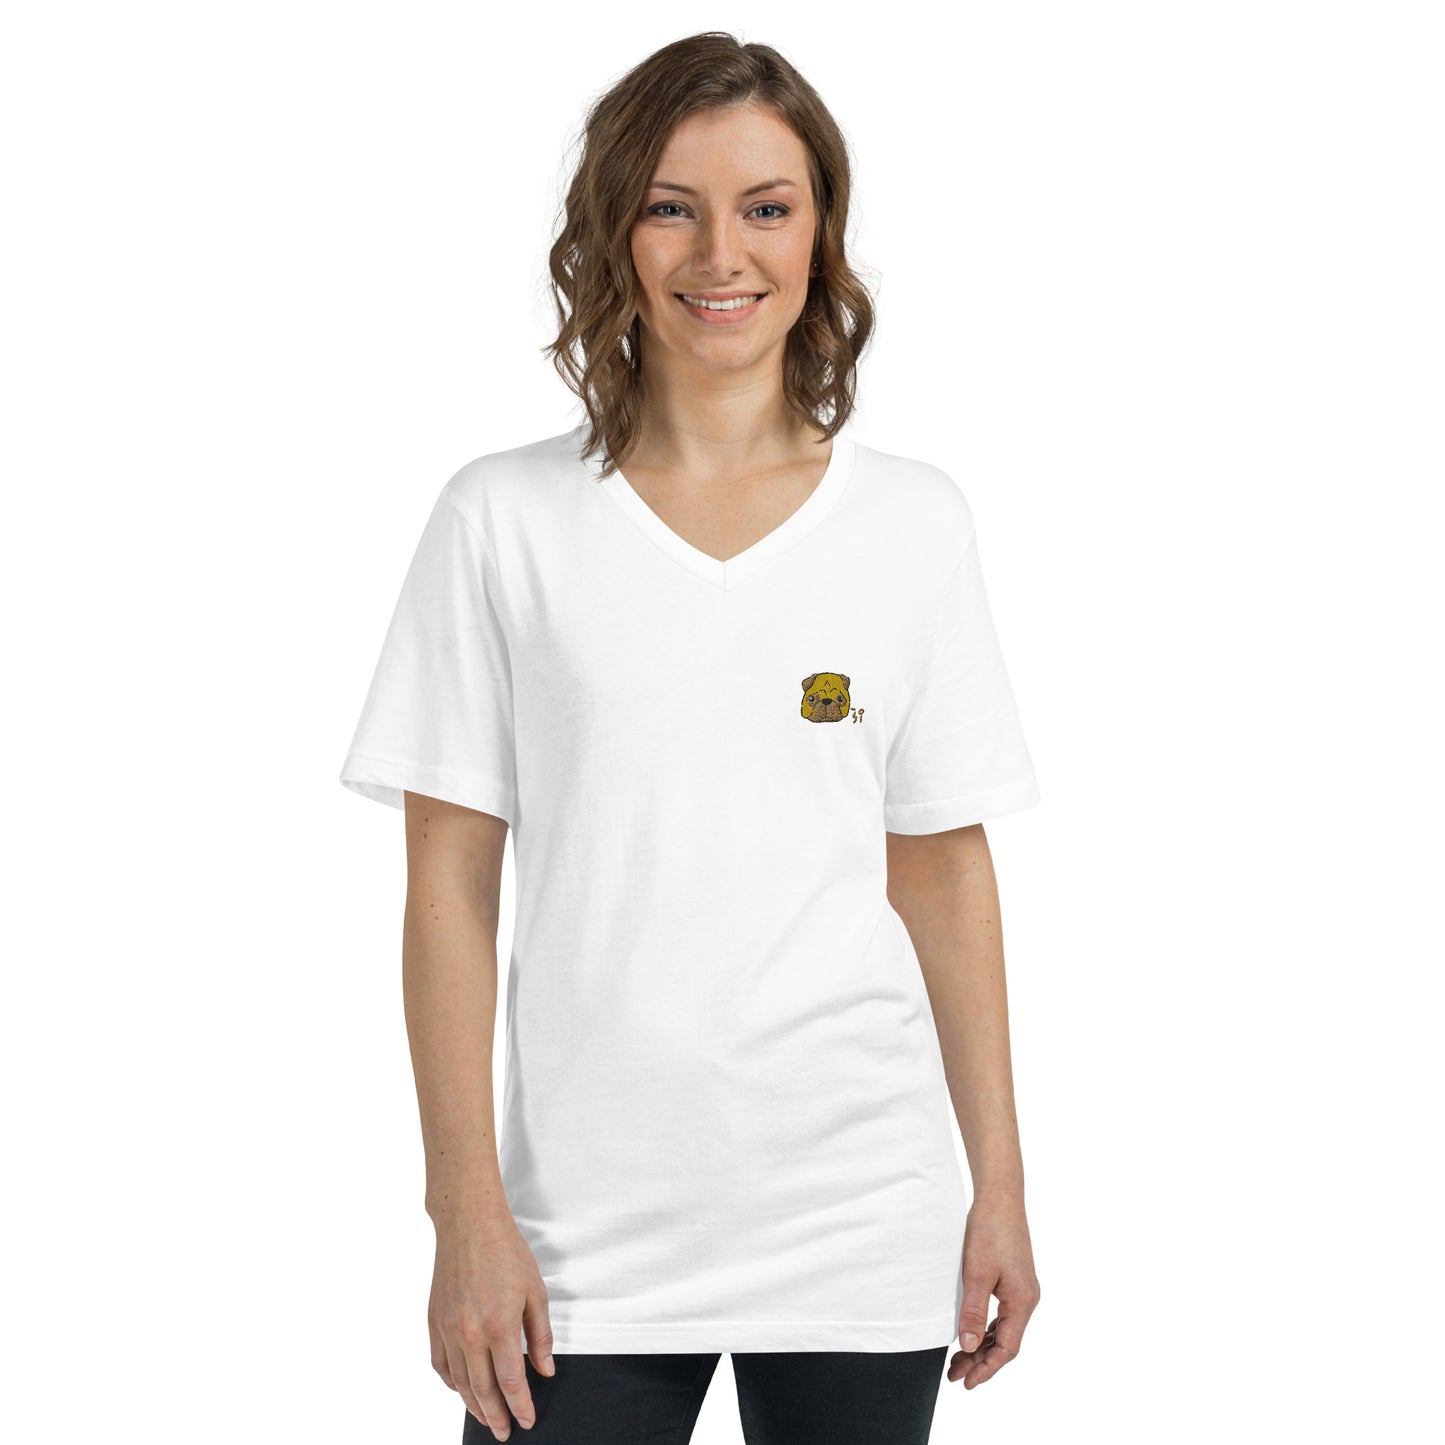 Pug Unisex Short Sleeve V-Neck T-Shirt